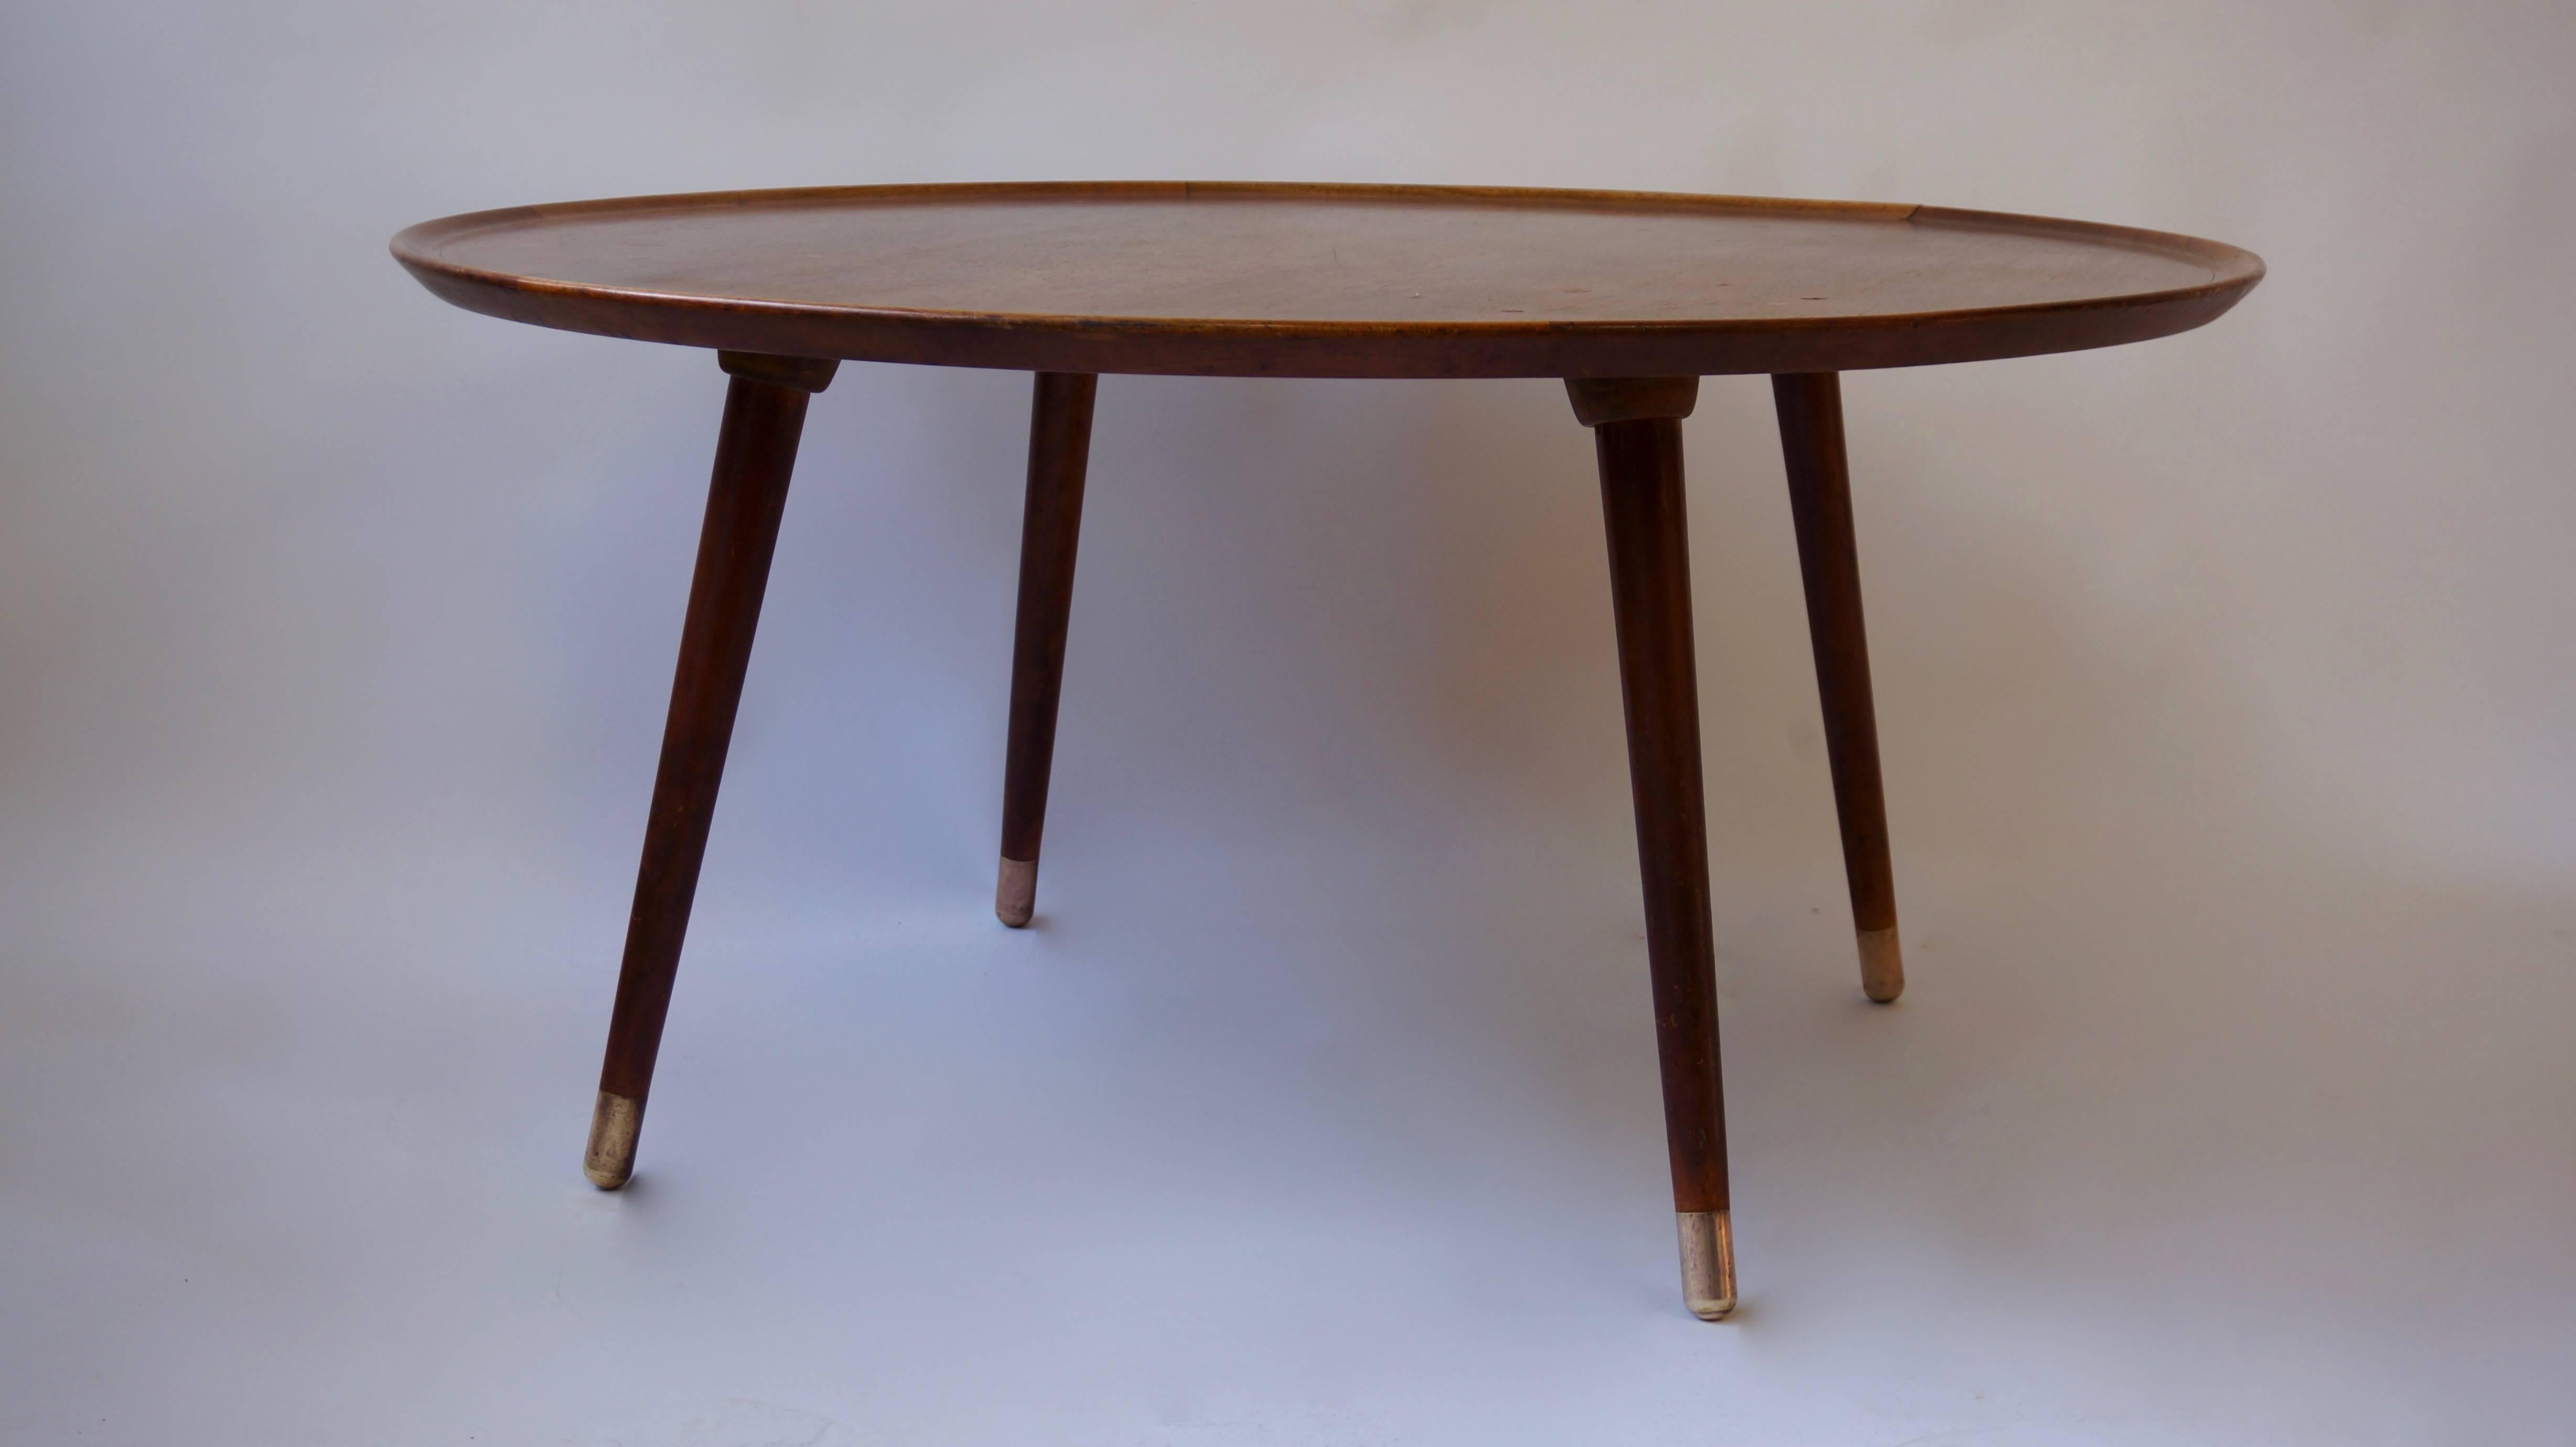 Fifties coffee table.

Diameter:95 cm.
Height:46 cm

